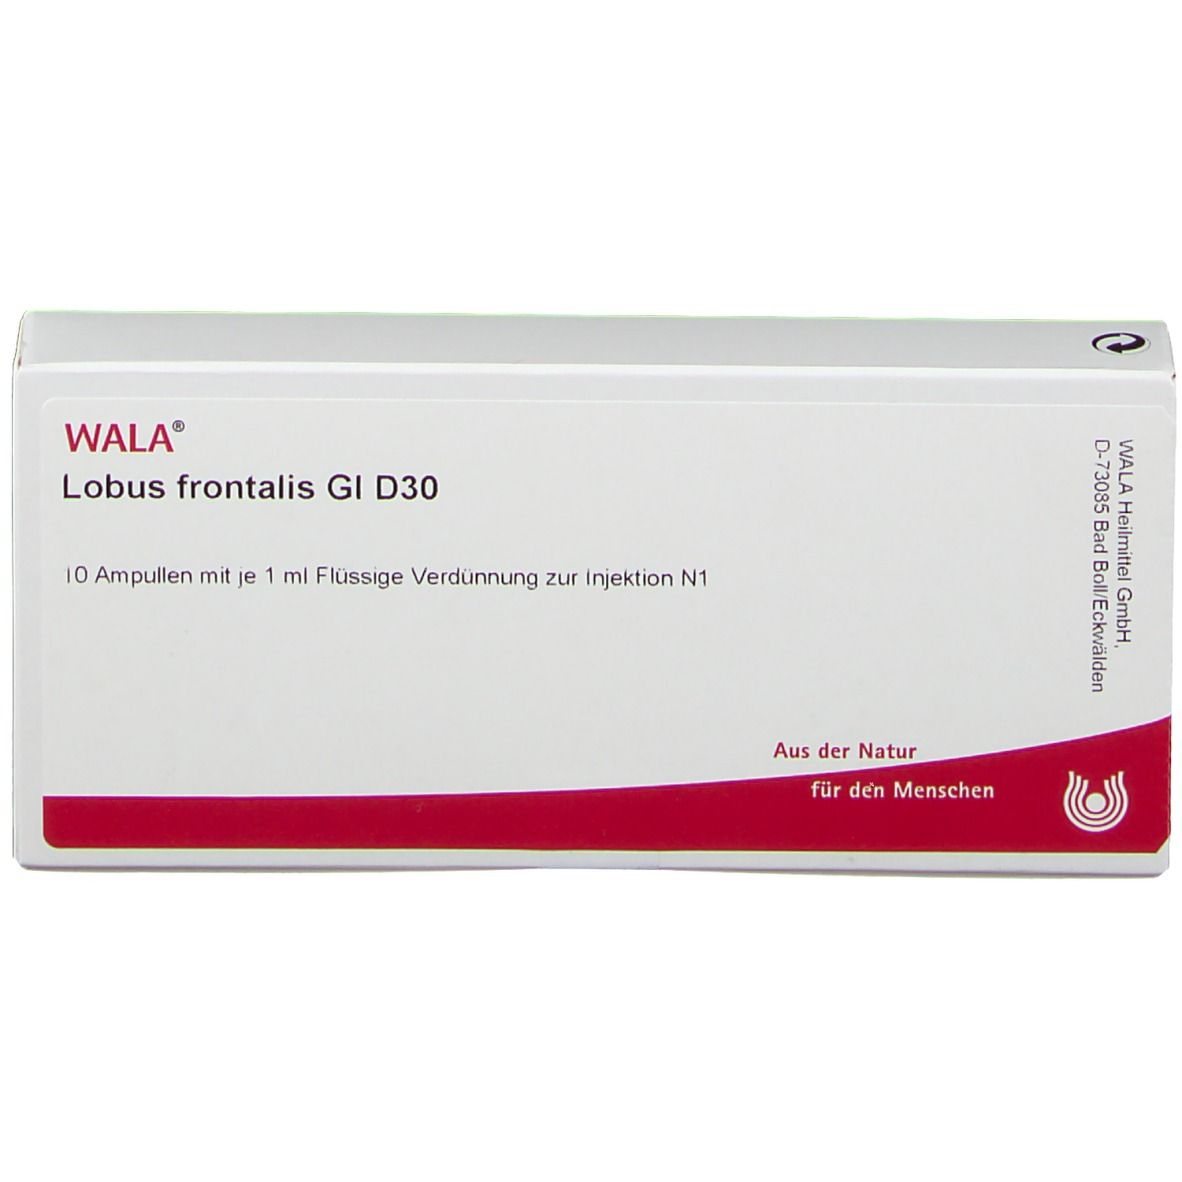 WALA® Lobus frontalis Gl D 30